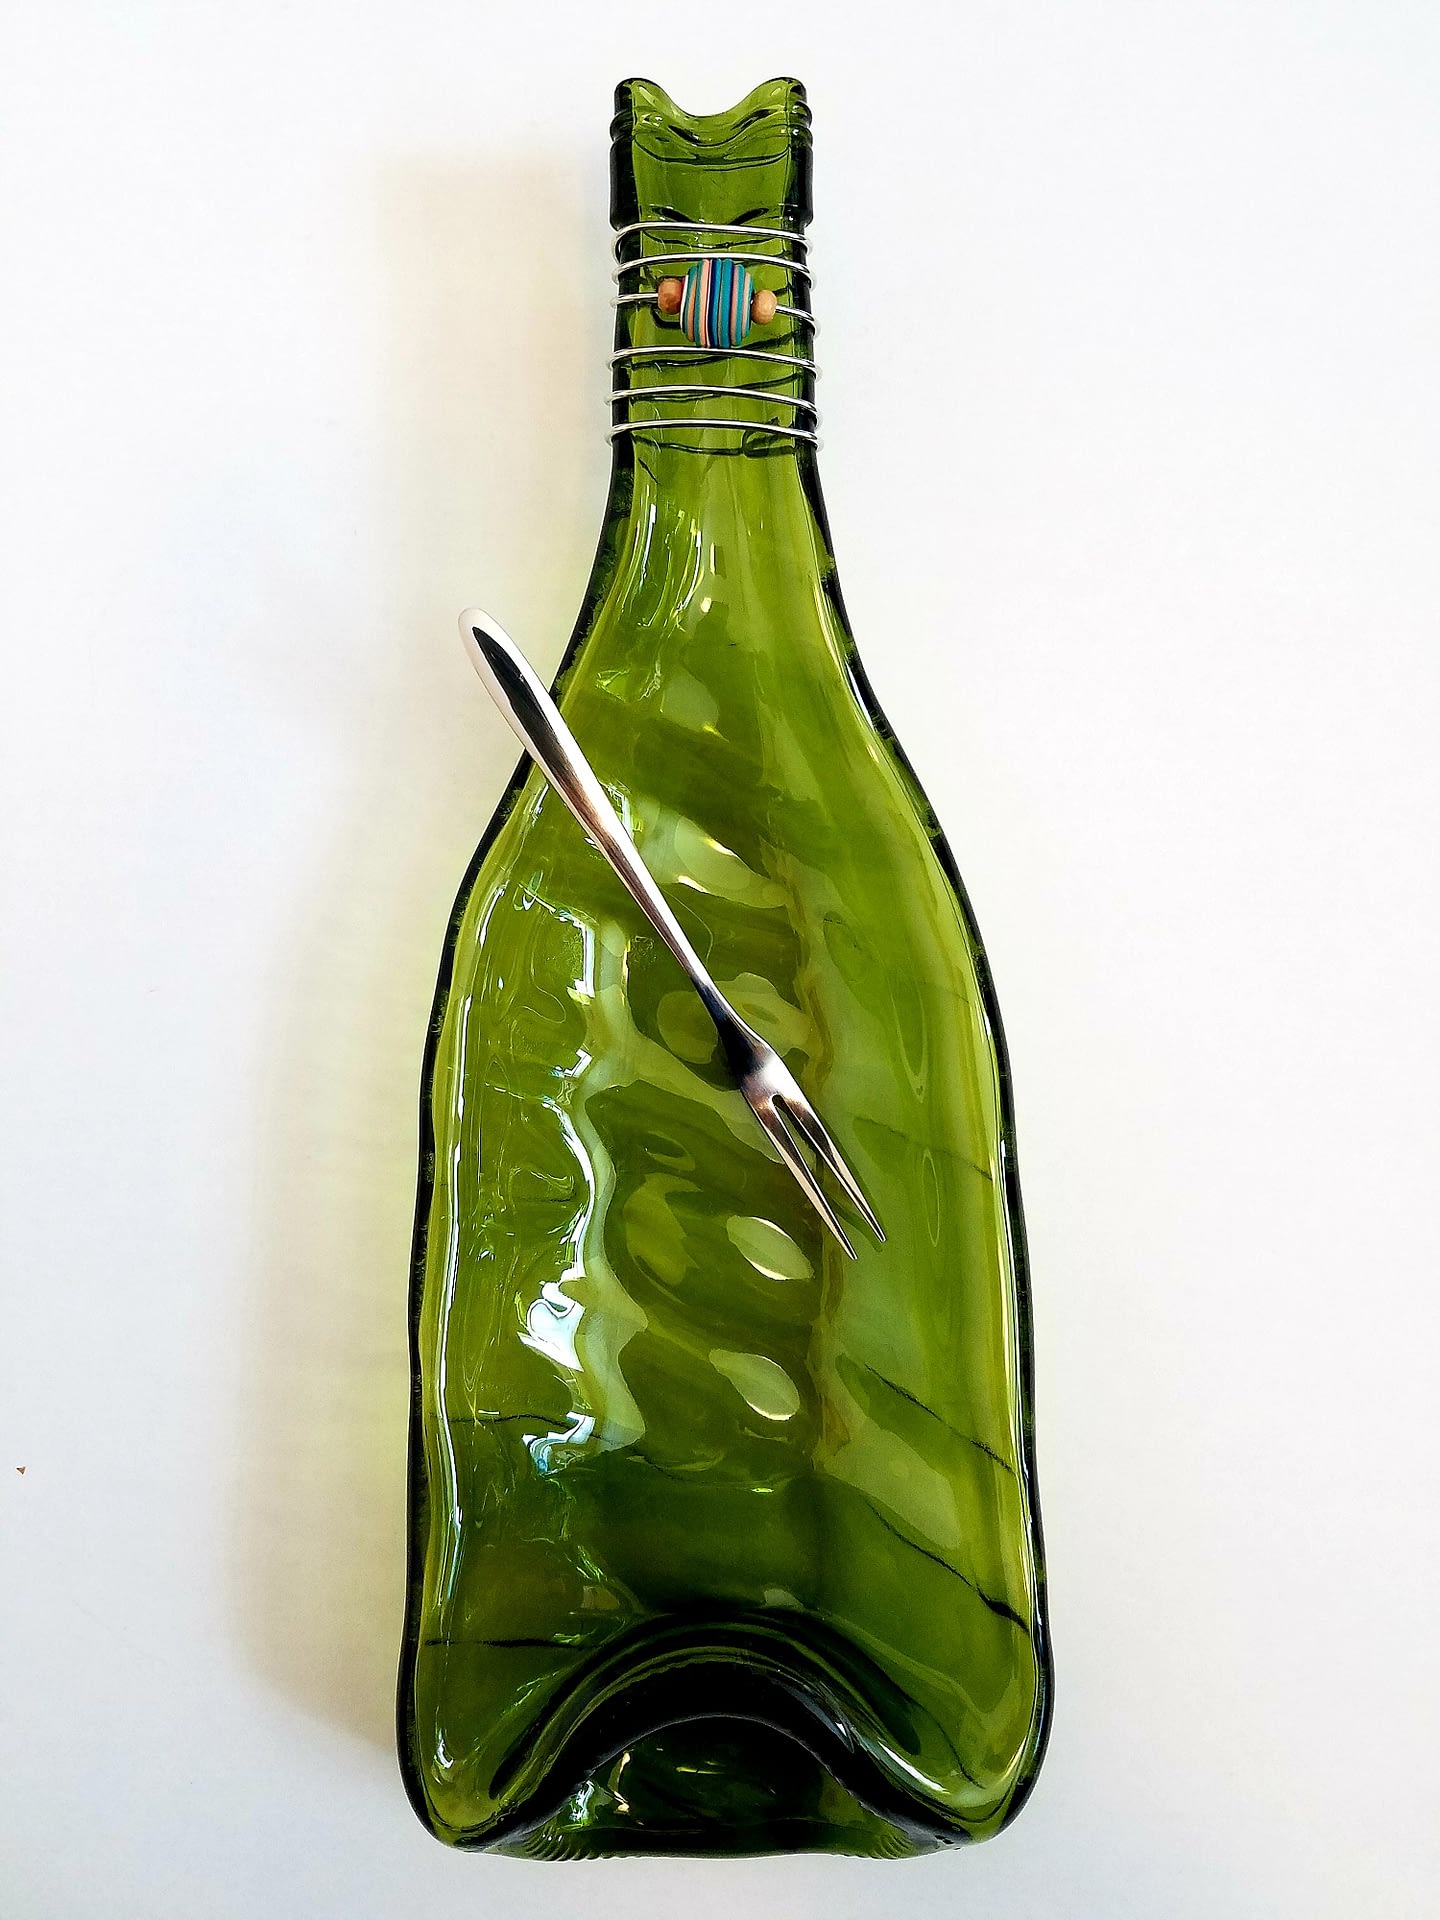 Melted Flattened Wine Bottles For Sale - $25 - The Krafty Caterer